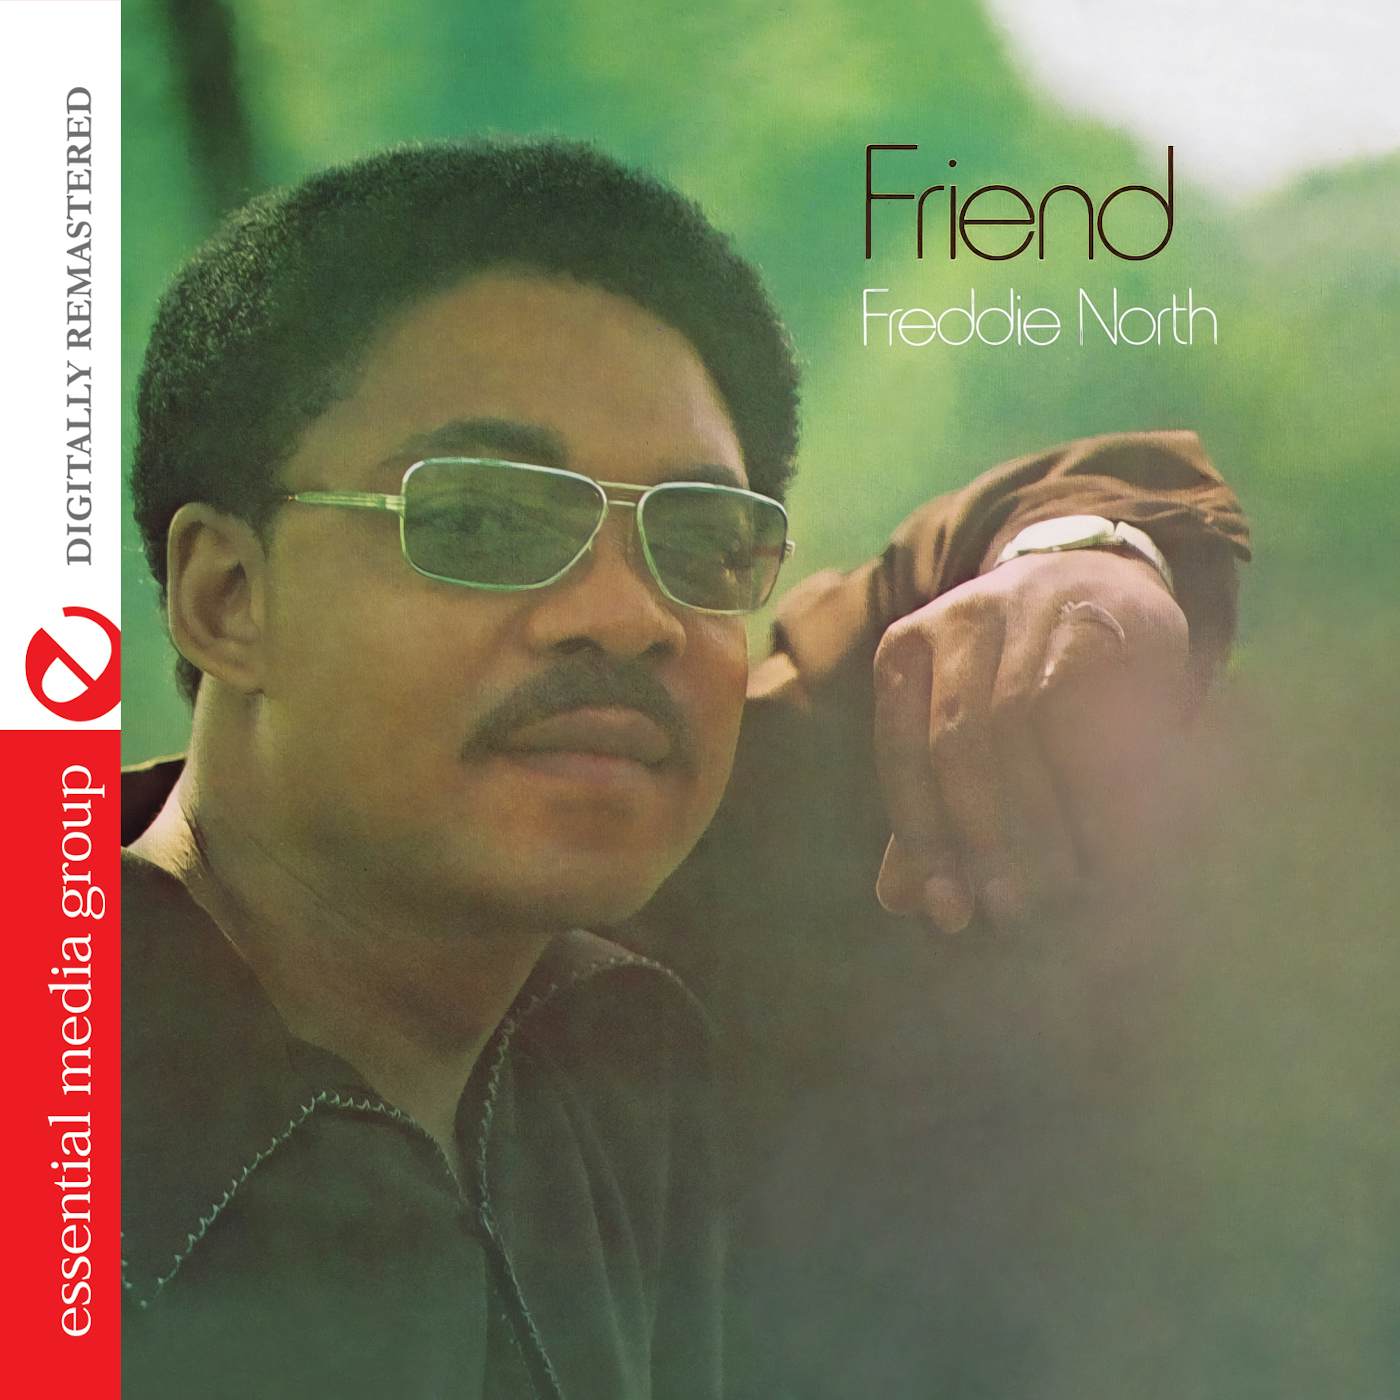 Freddie North FRIEND CD